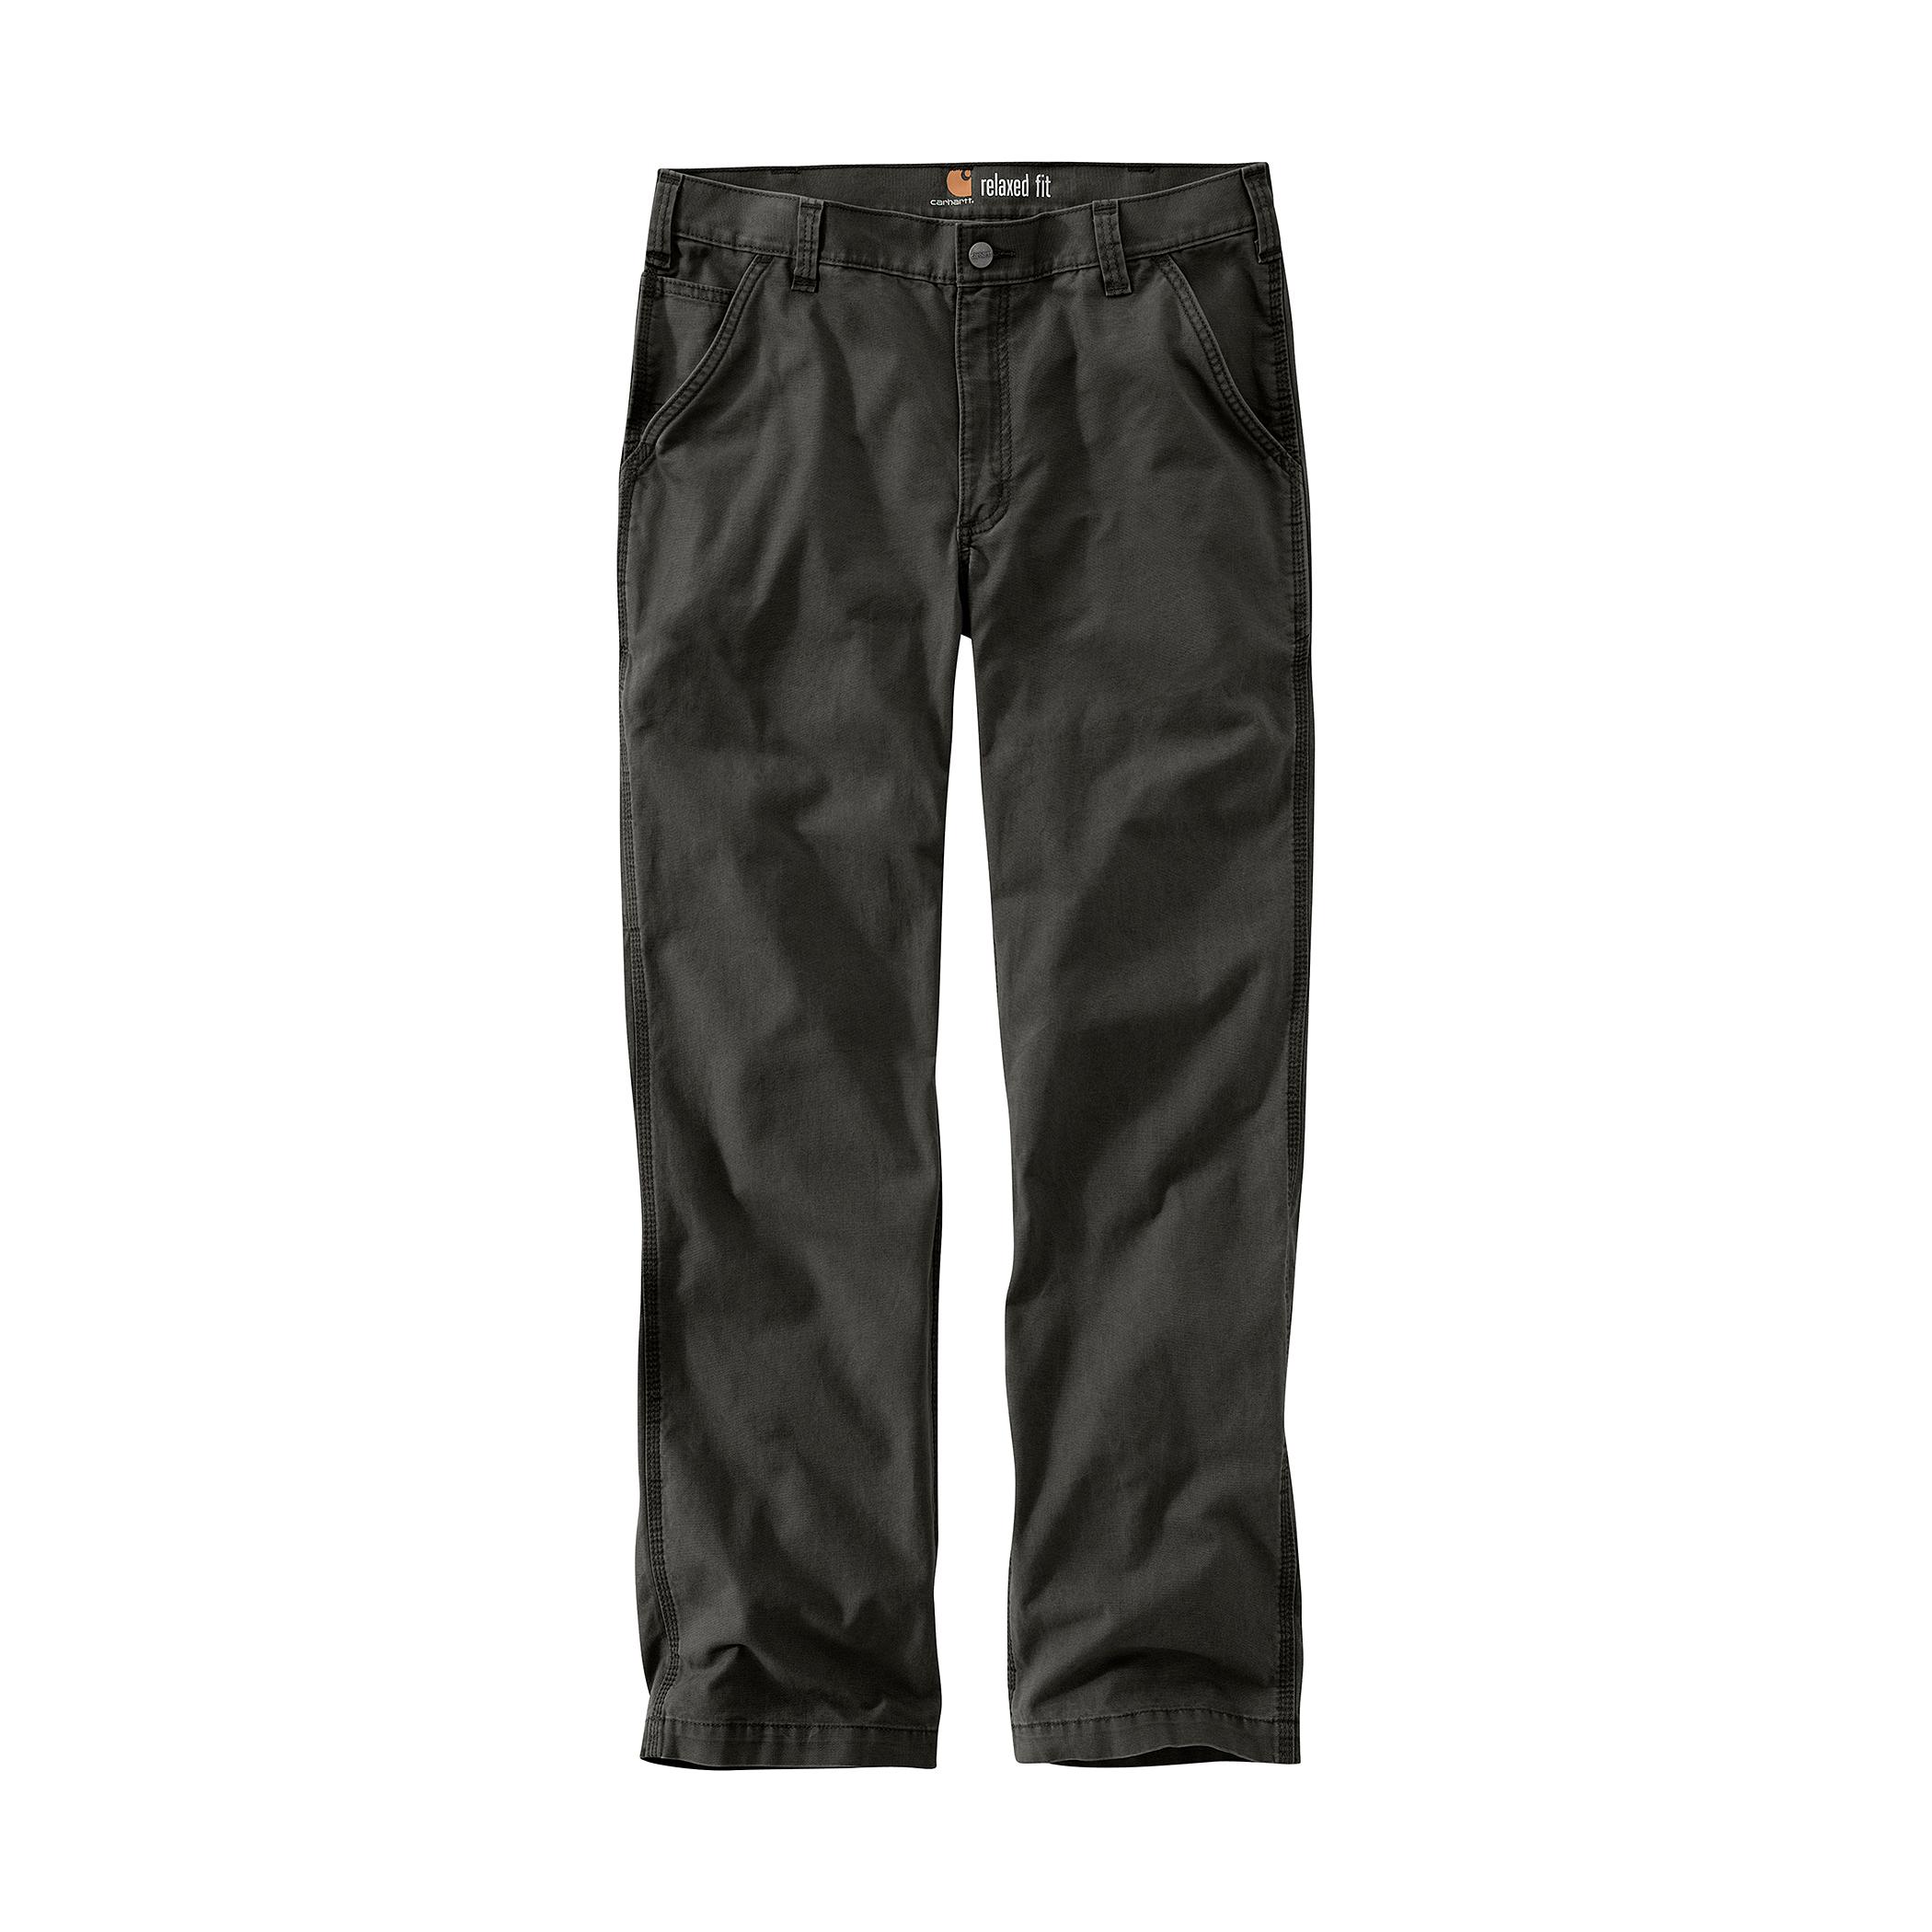 gray carhartt pants